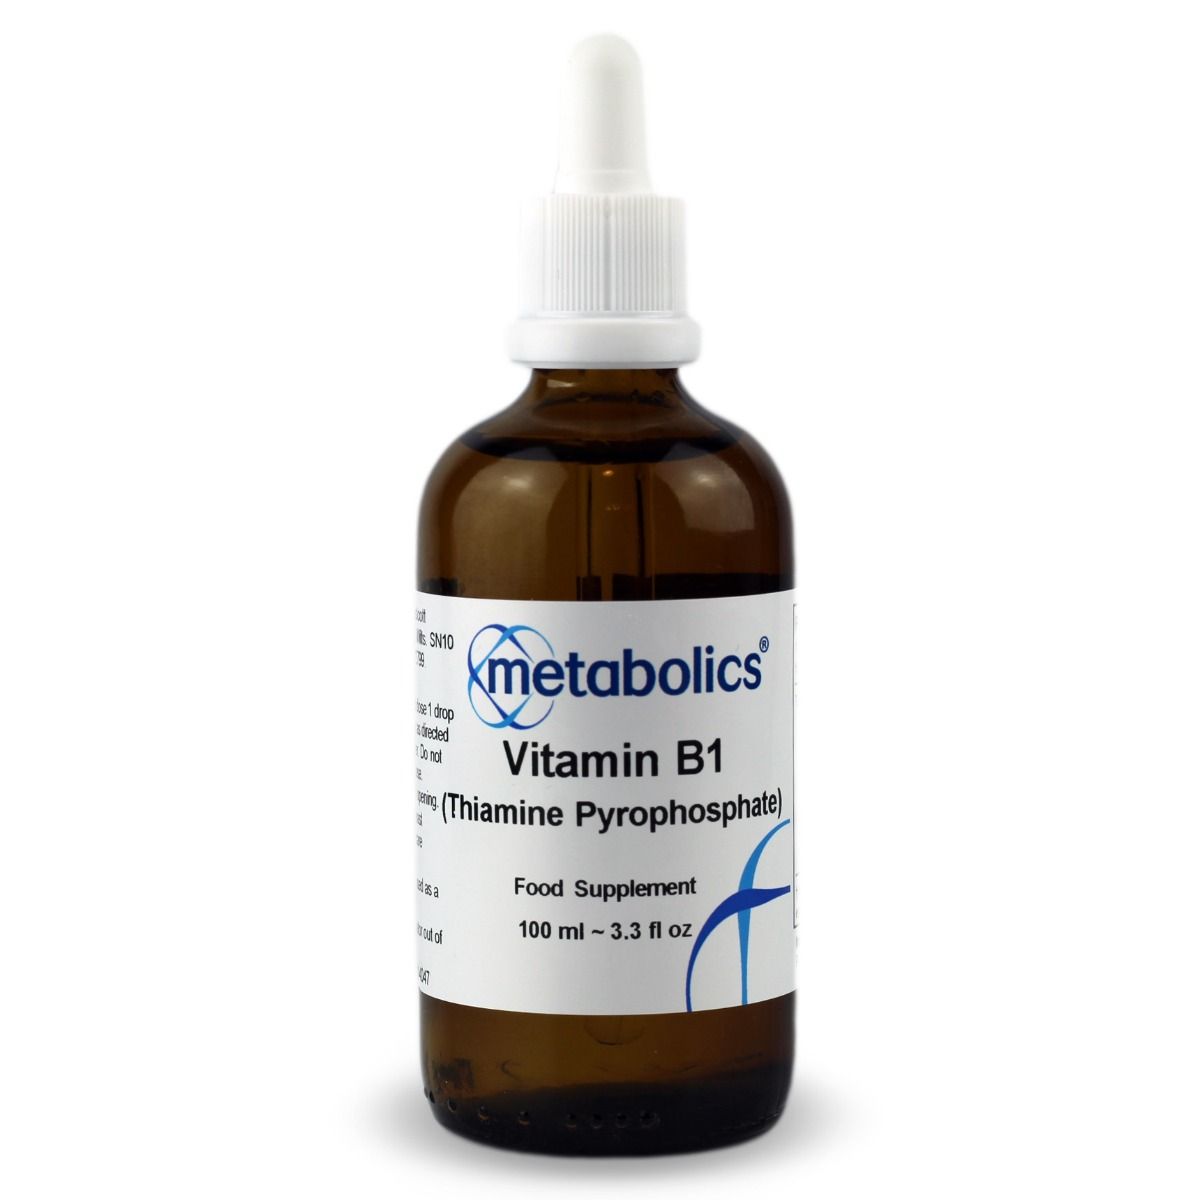 Vitamin B1 (Thiamine Pyrophosphate)